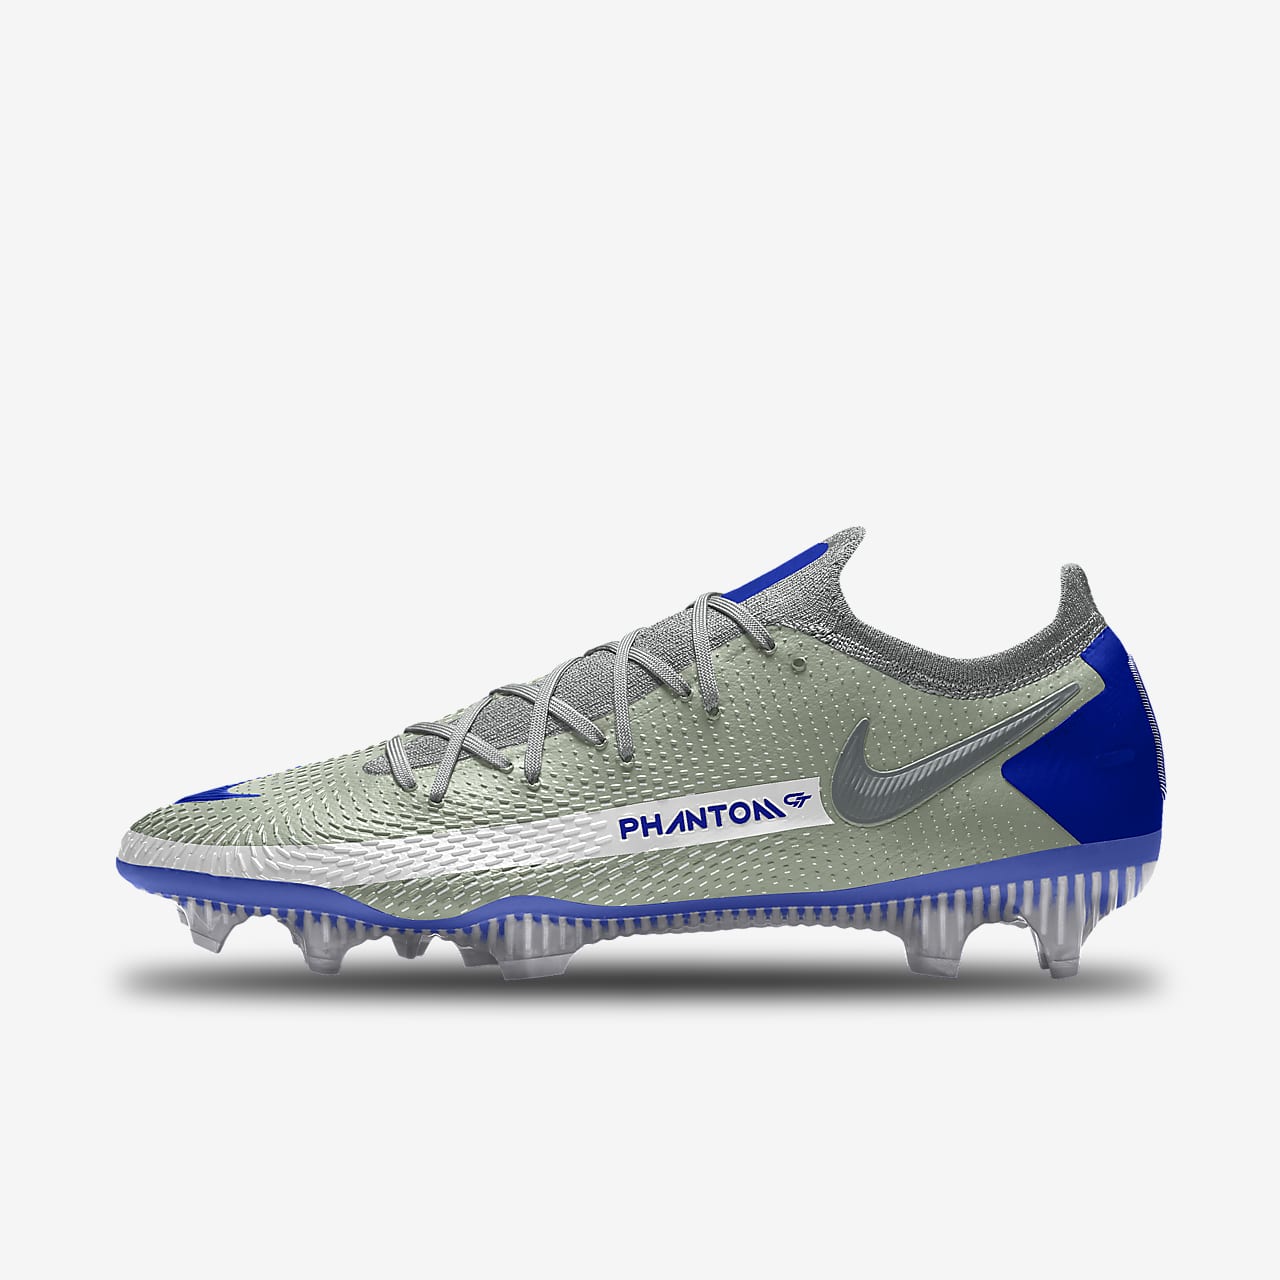 botas de futbol nike para personalizar